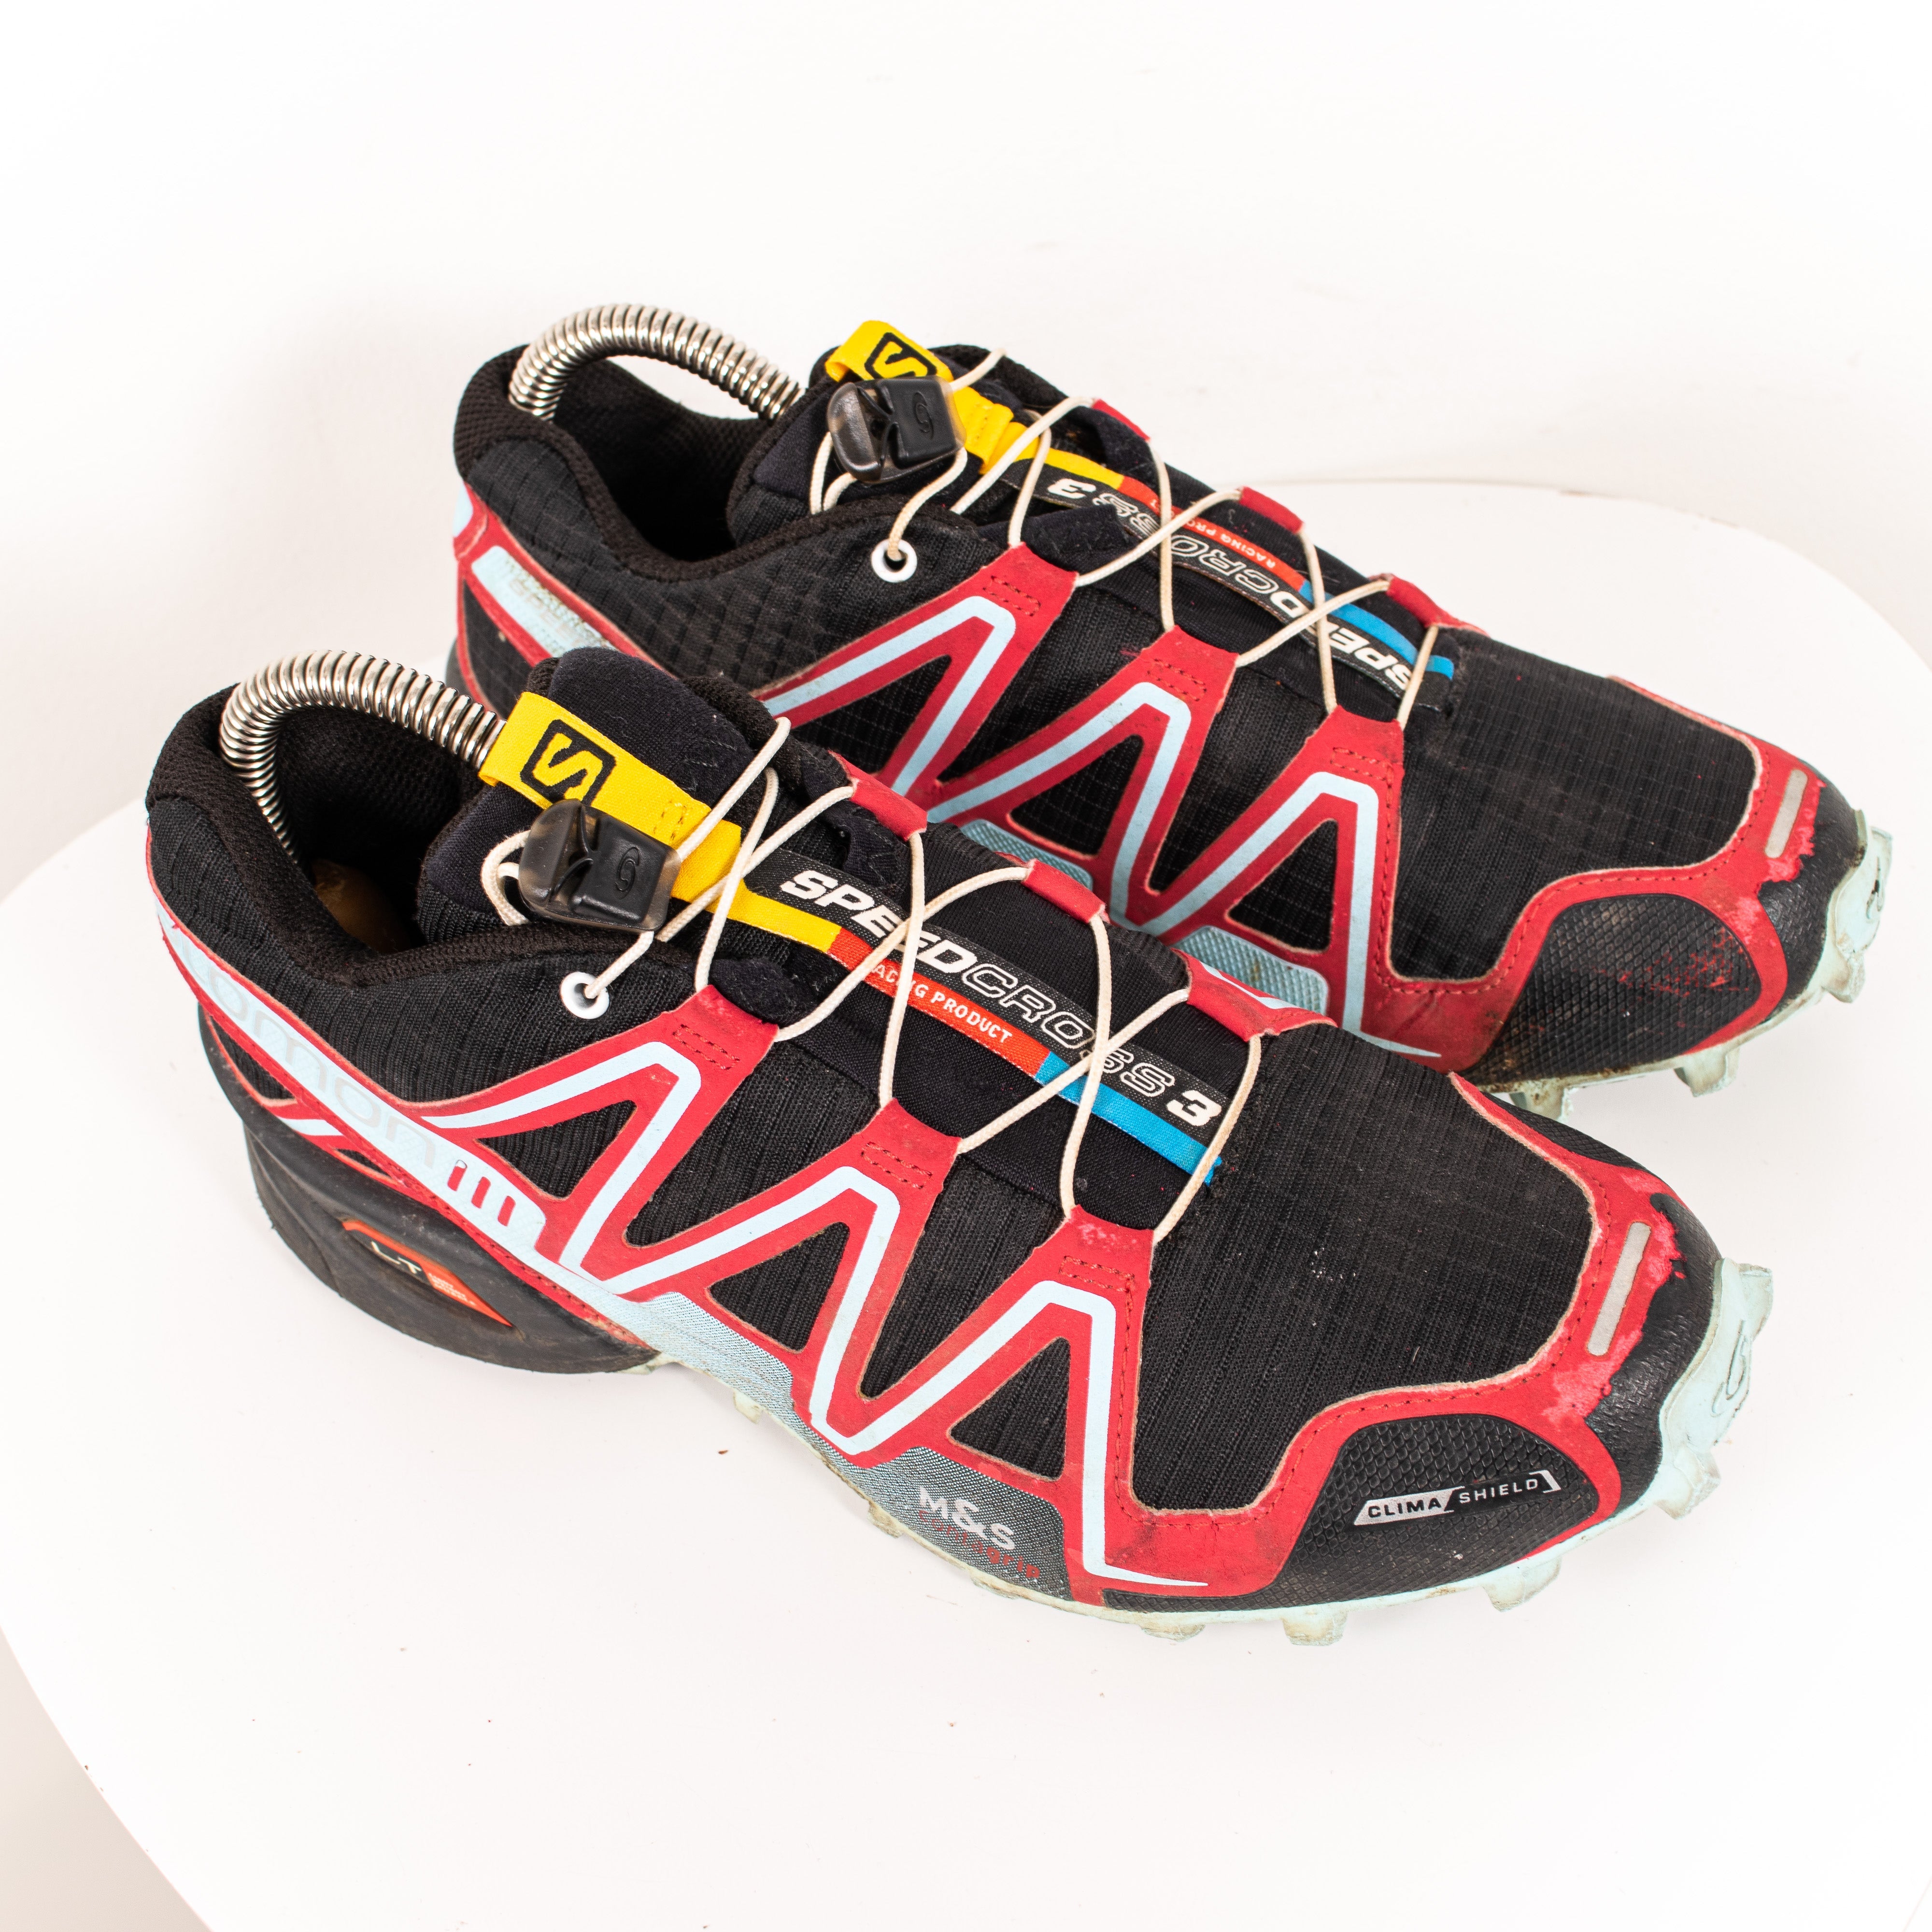 Salomon Speedcross 3 Climashield Contagrip Multicolor Trail Running Shoes Sneakers Women's EU38